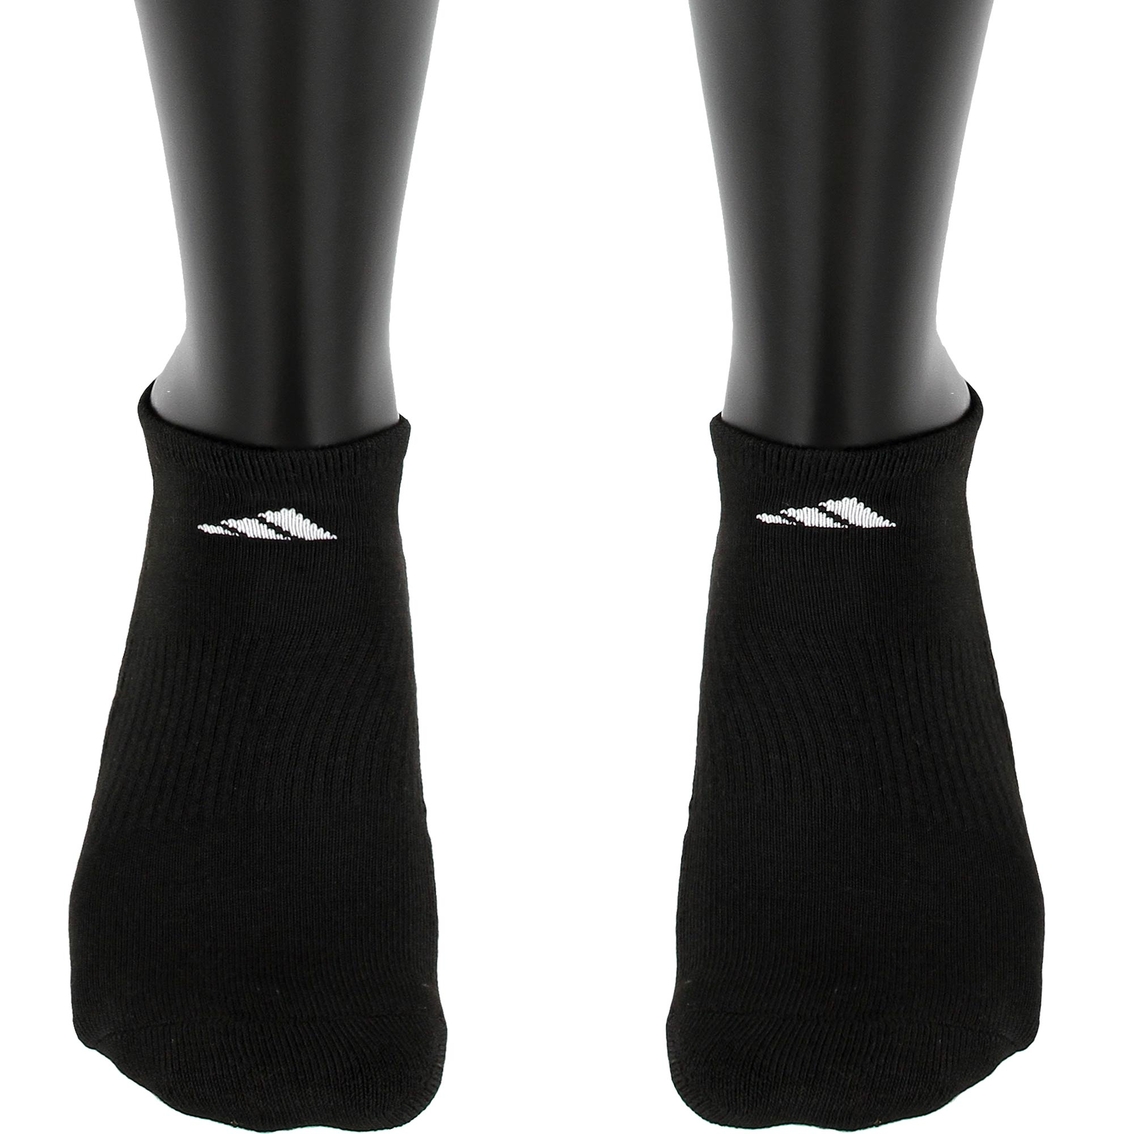 Adidas Men's Athletic No Show Socks 6 Pk. - Image 3 of 4